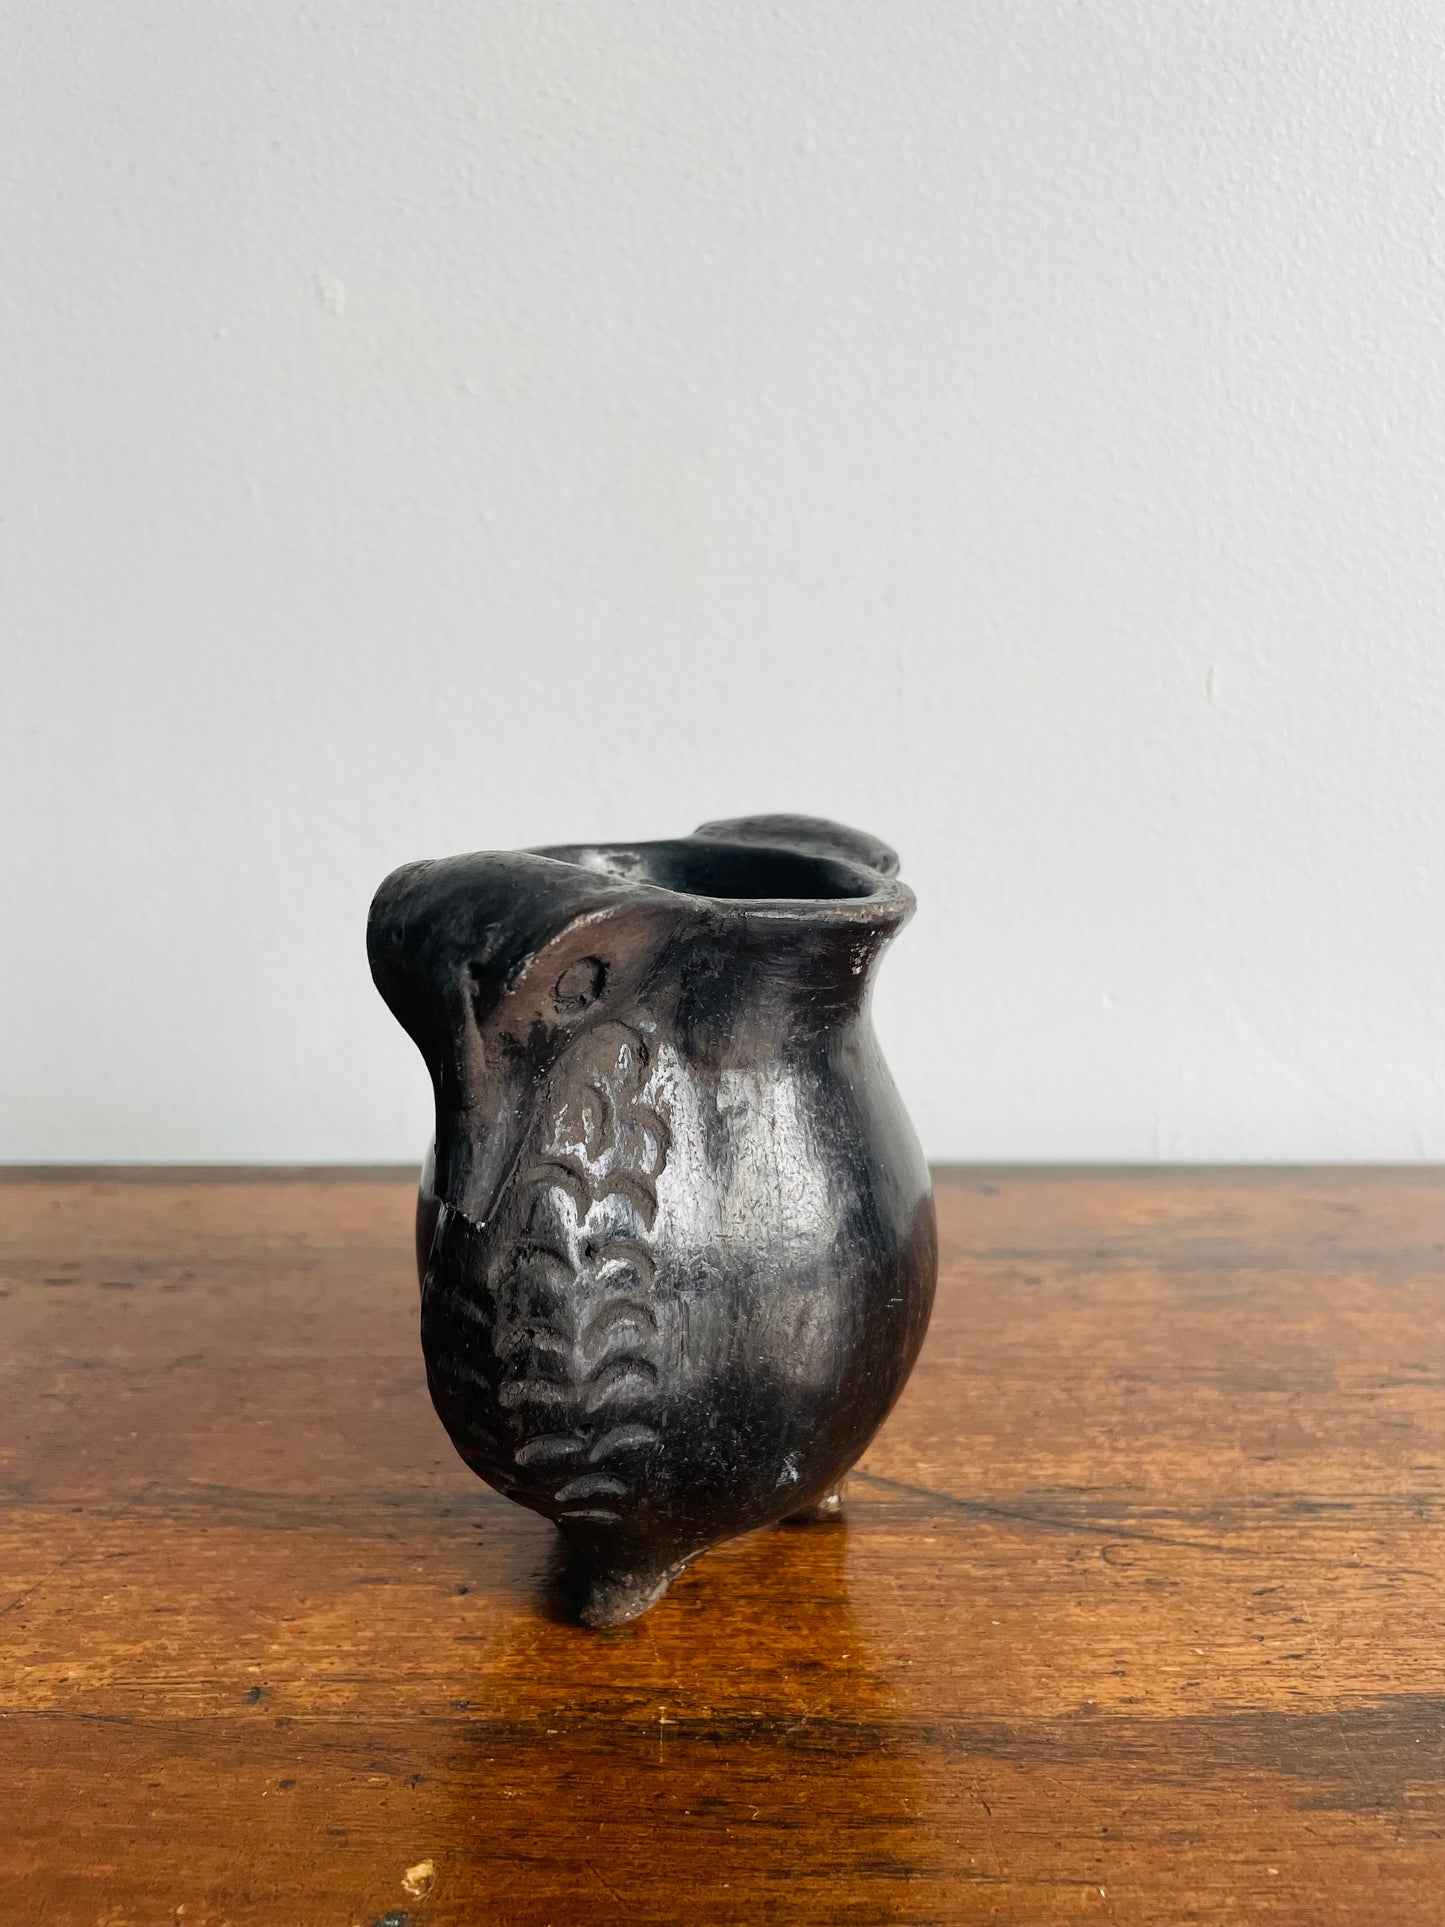 Barro Negro Black Clay Pottery from Oaxaca Mexico - Vase Cup with Tripod Feet & Turkey Bird Design